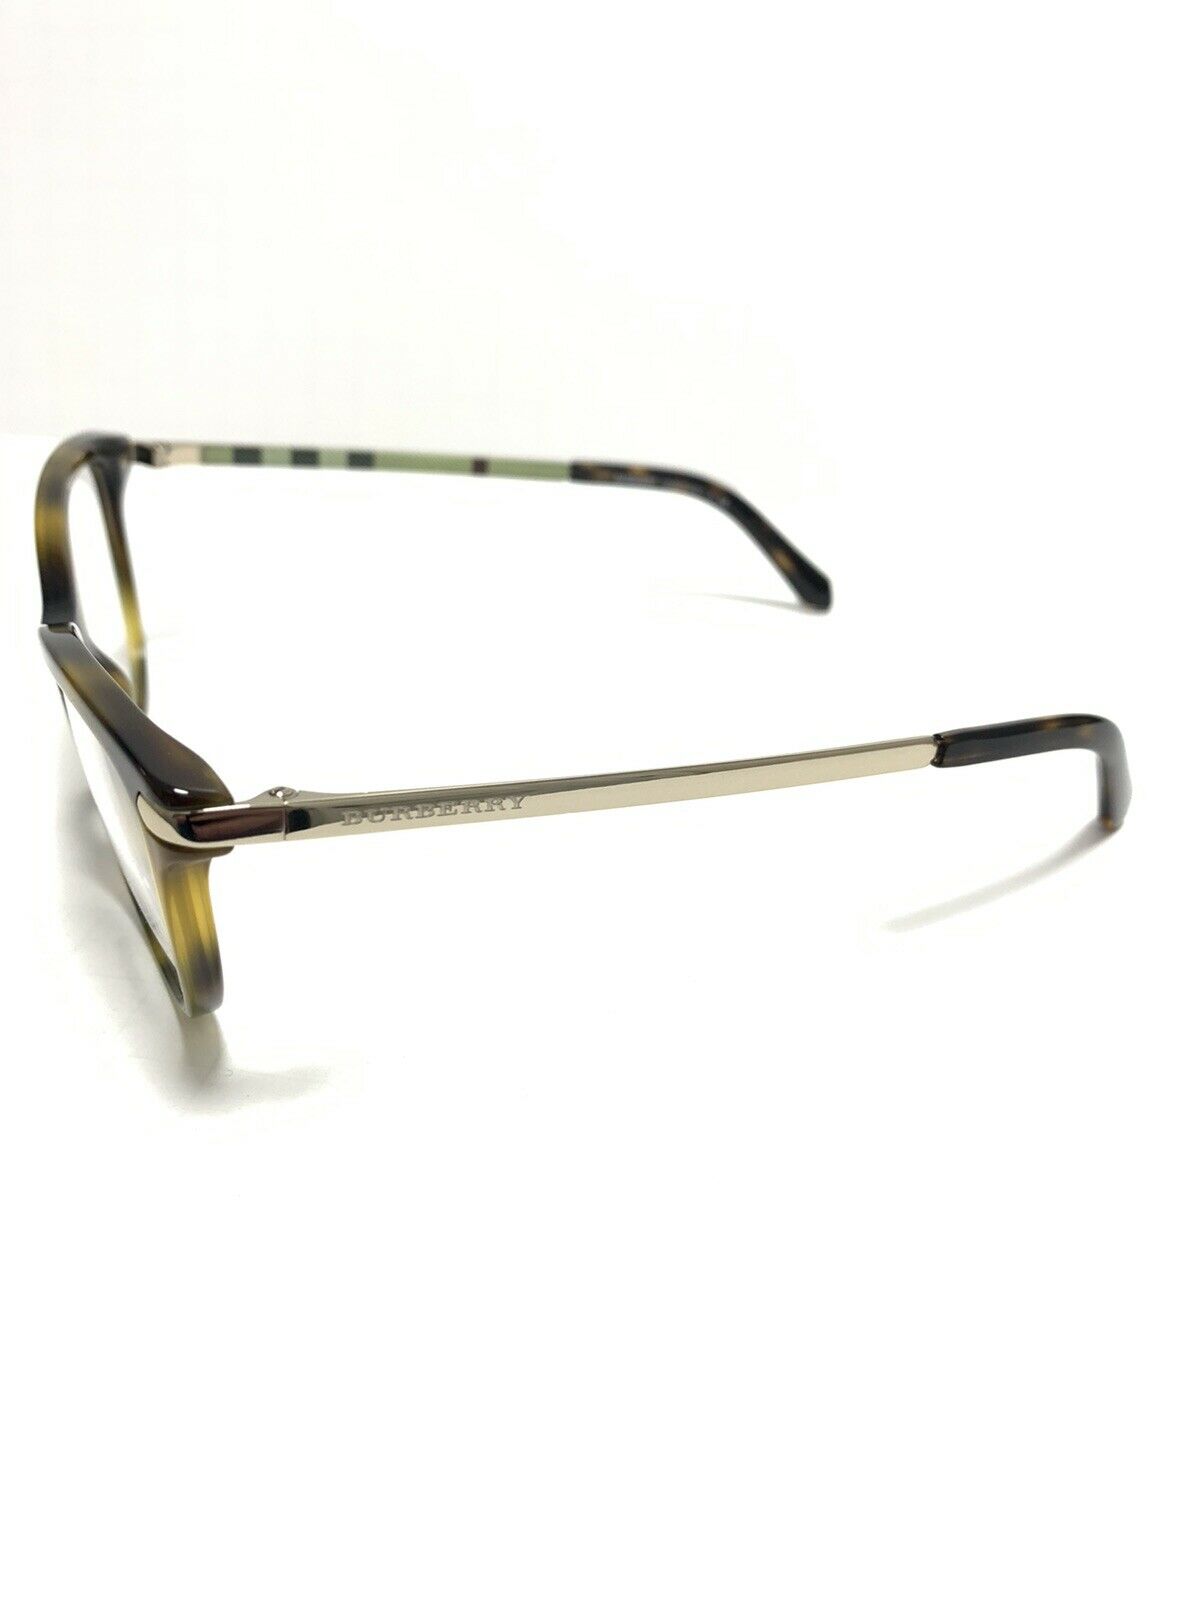 Burberry BE2280-3316 52mm New Eyeglasses